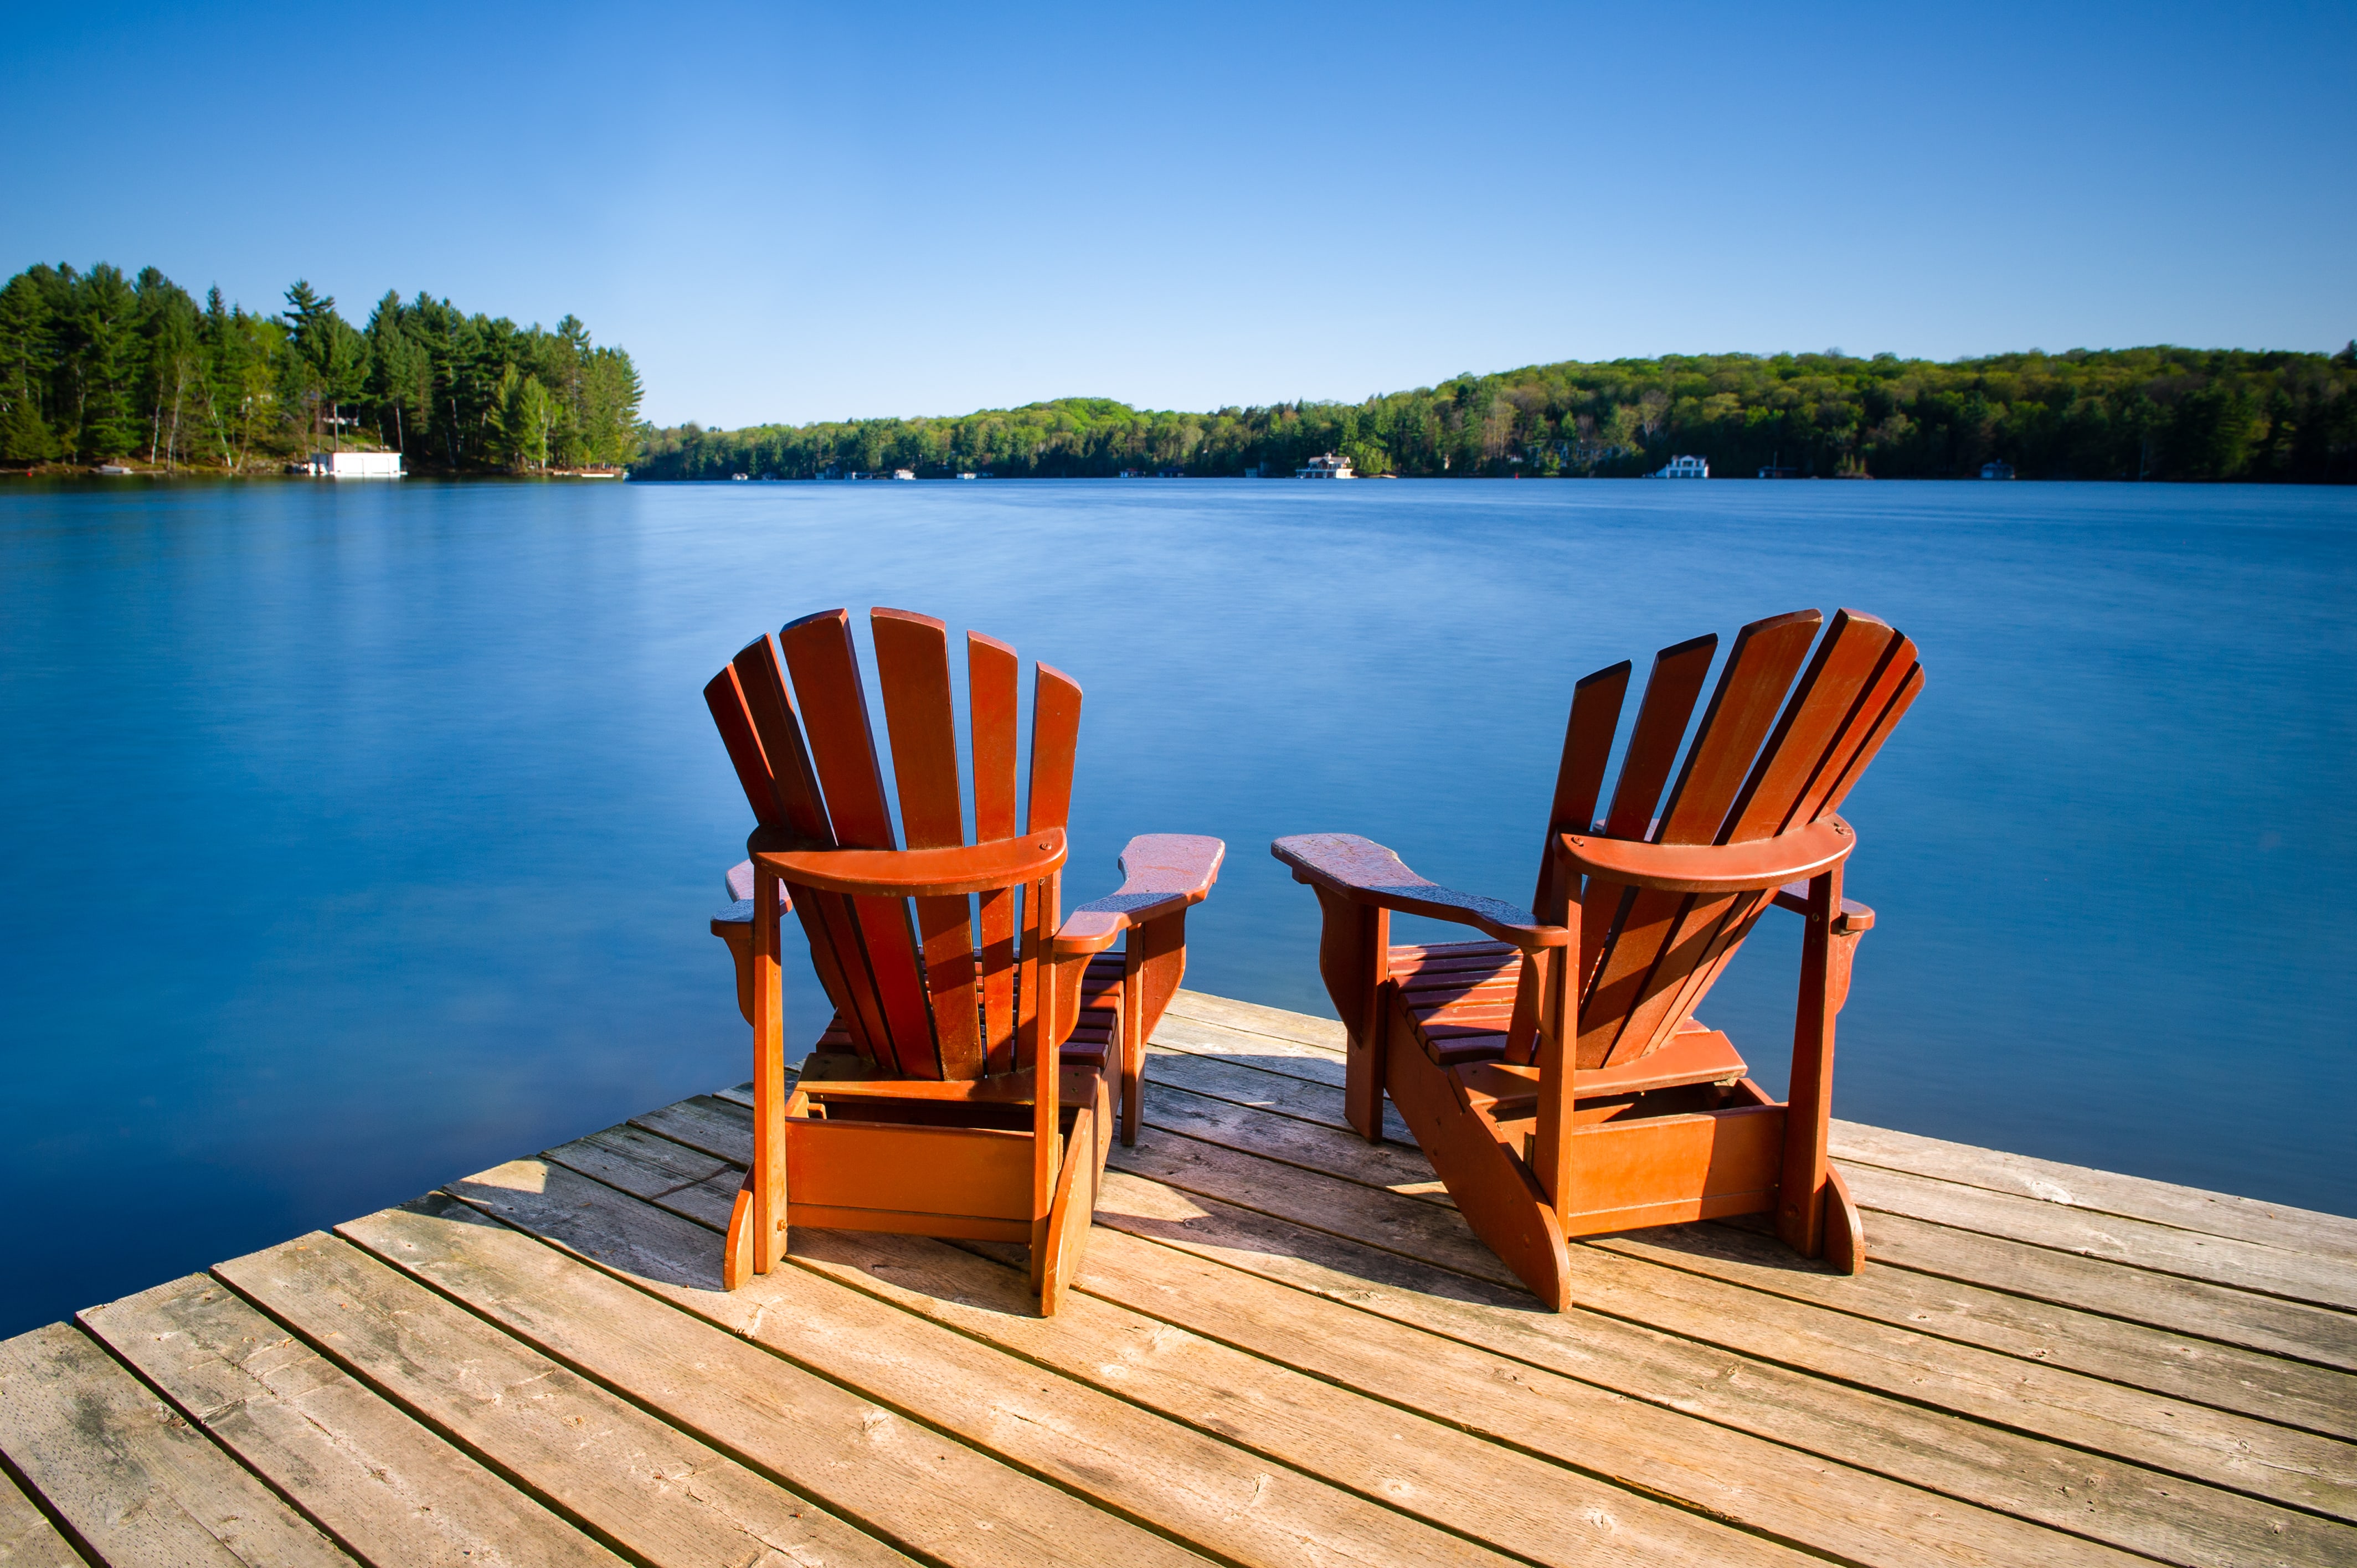 Adirondack chairs overlooking a lake.